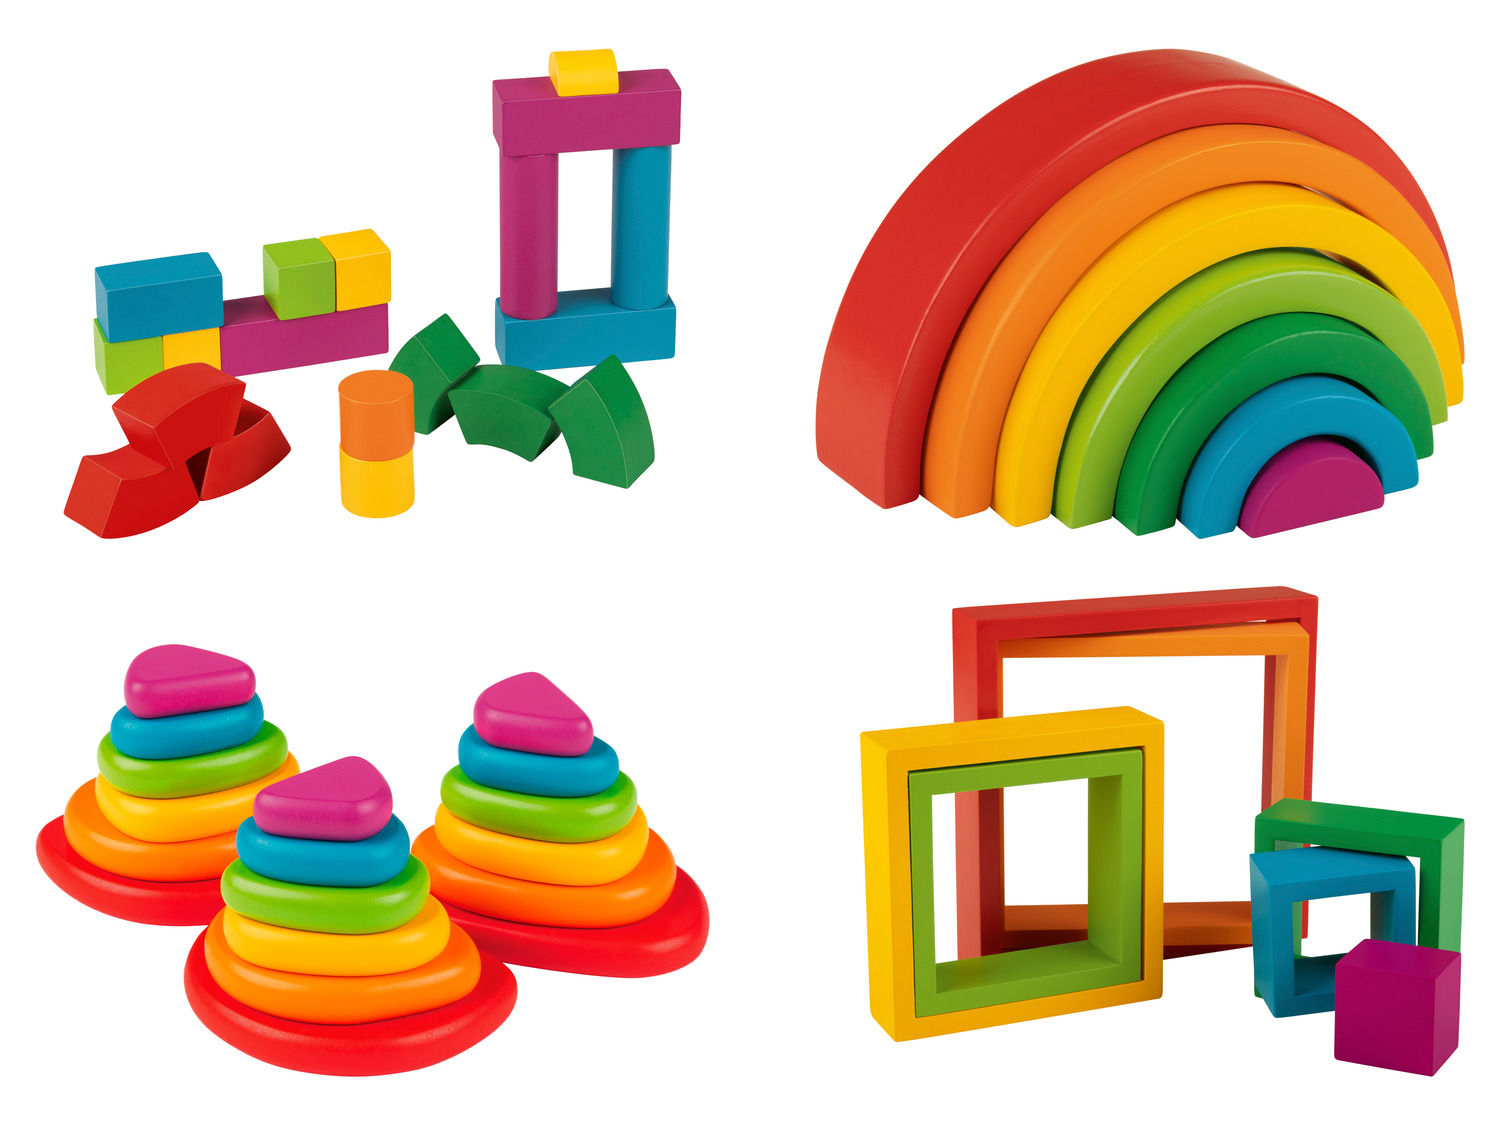 Playtive Holzspielzeug, LIDL Montessori-Art nach 